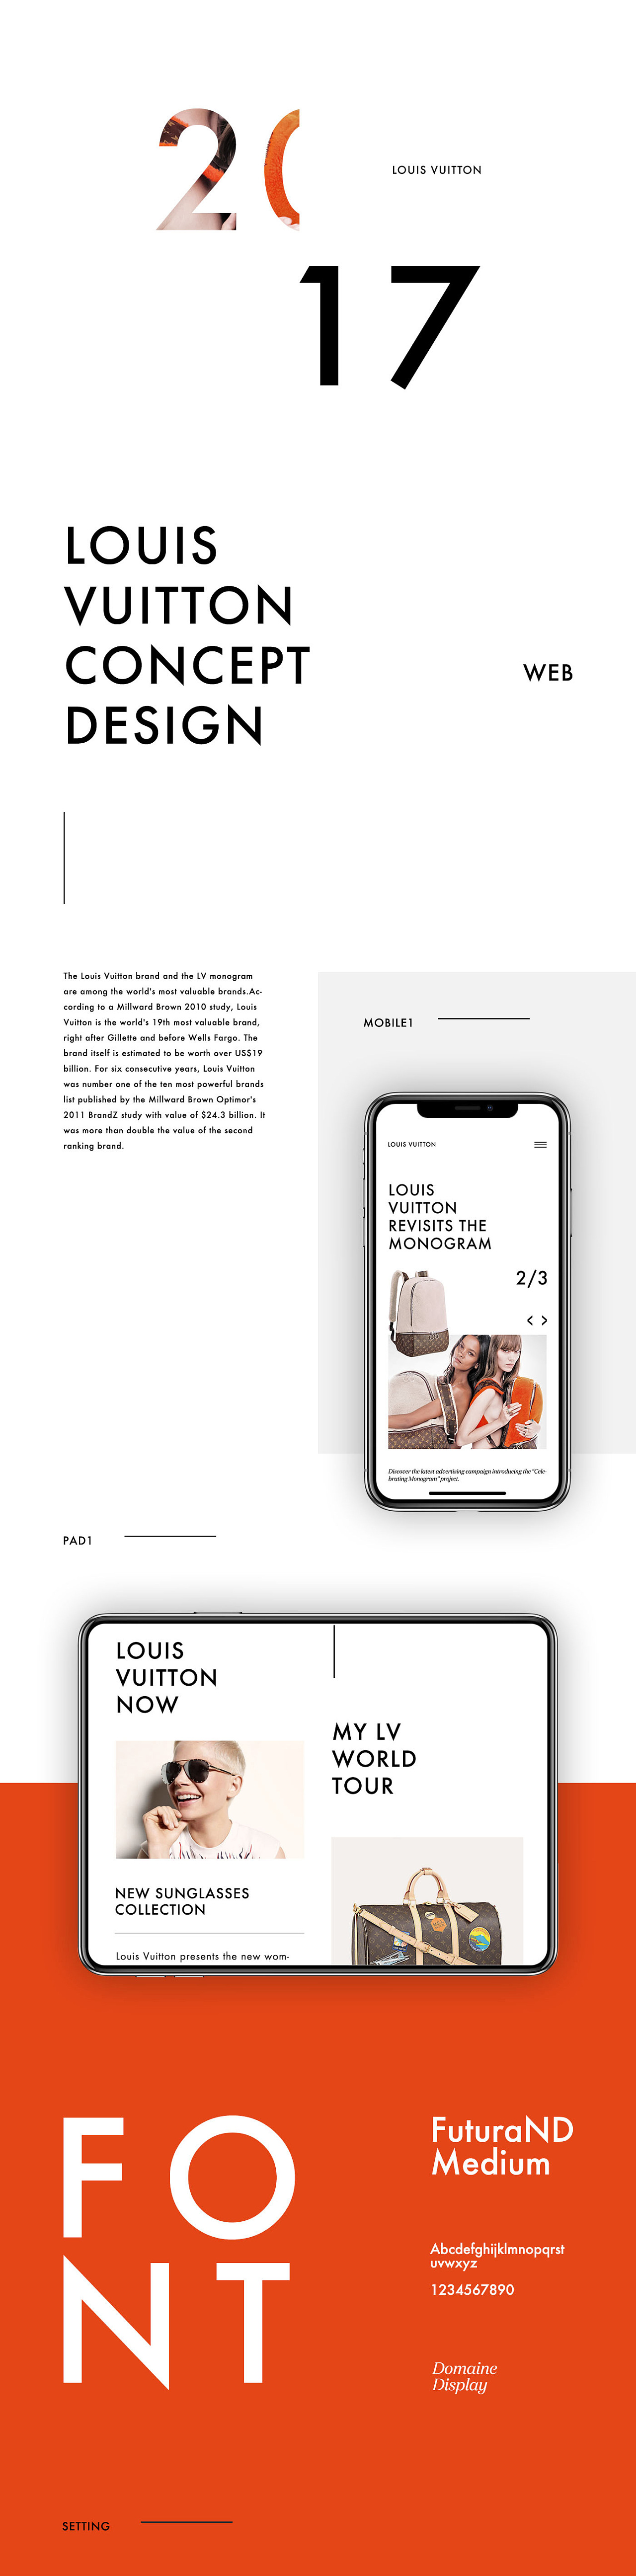 LV Website Concept Design